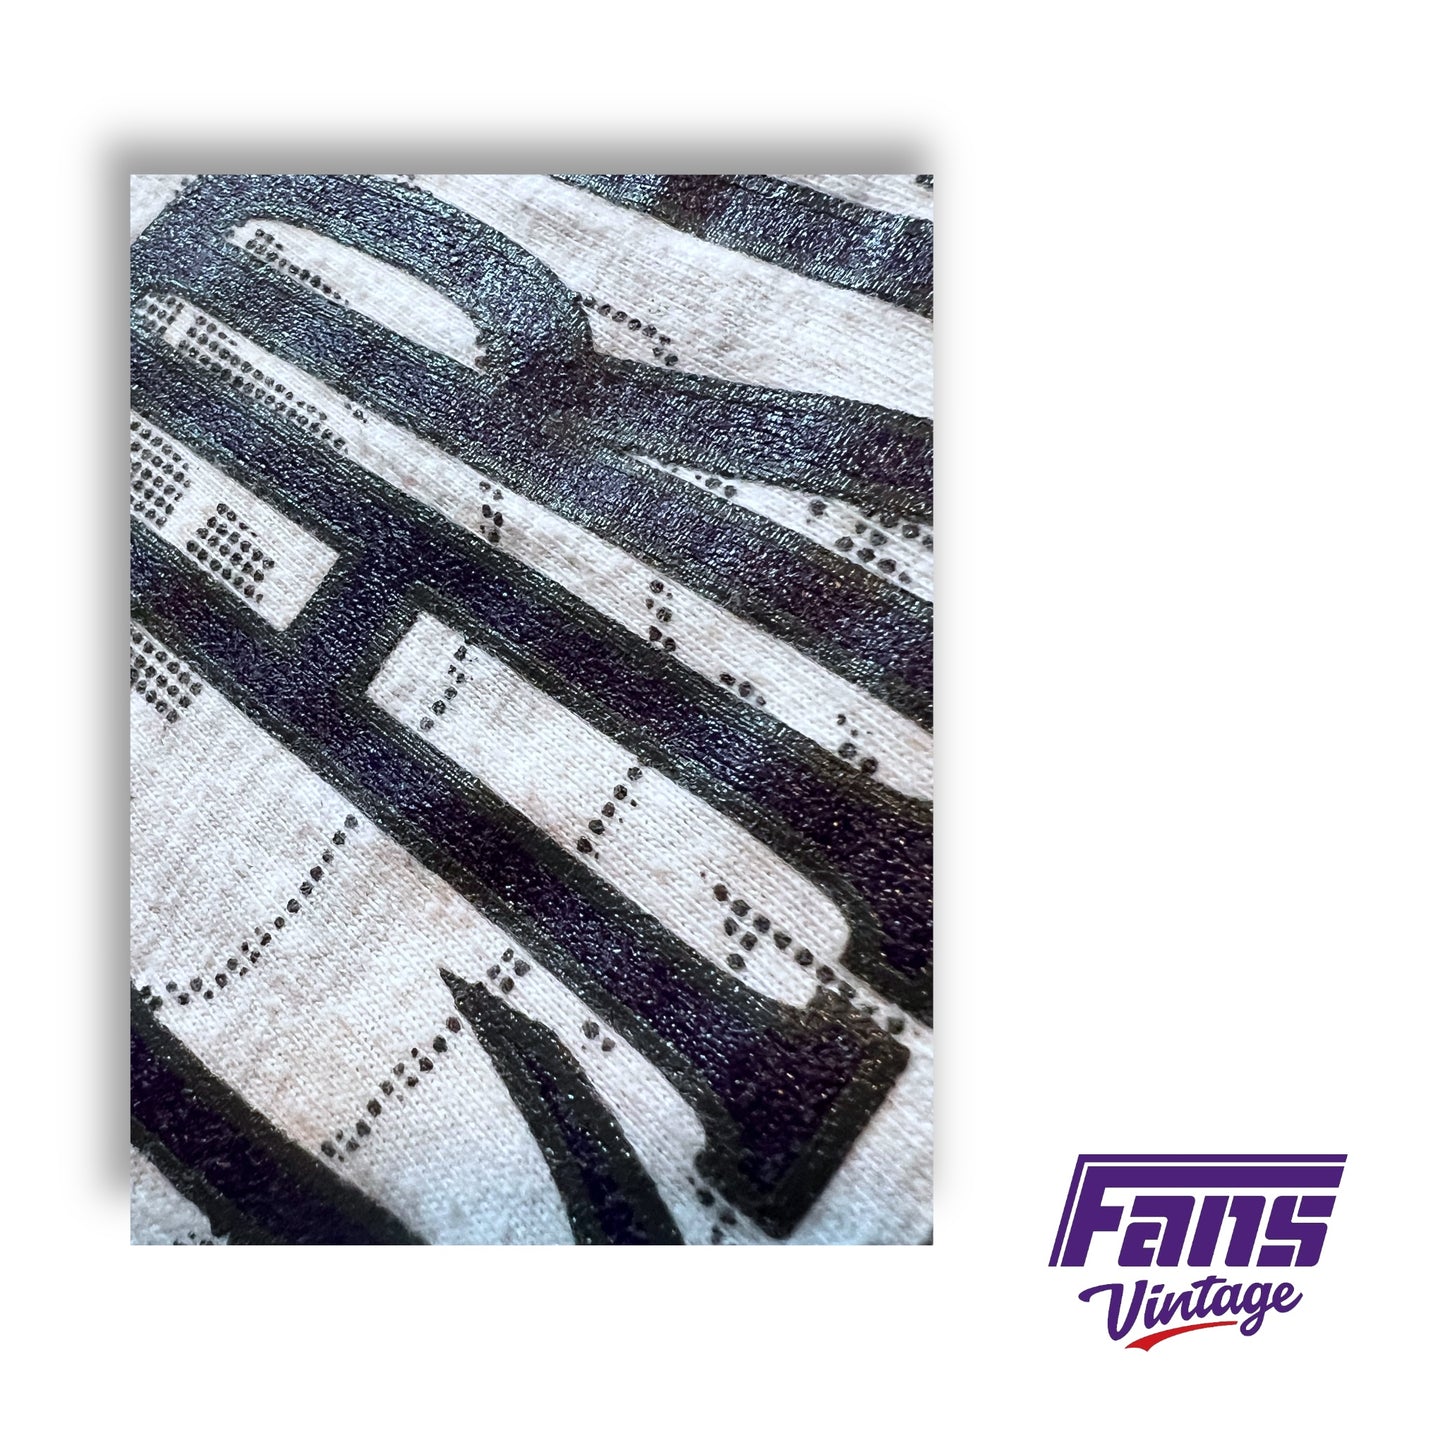 Awesome 90s Vintage TCU striped mock turtleneck long sleeve shirt - ULTRA SOFT!